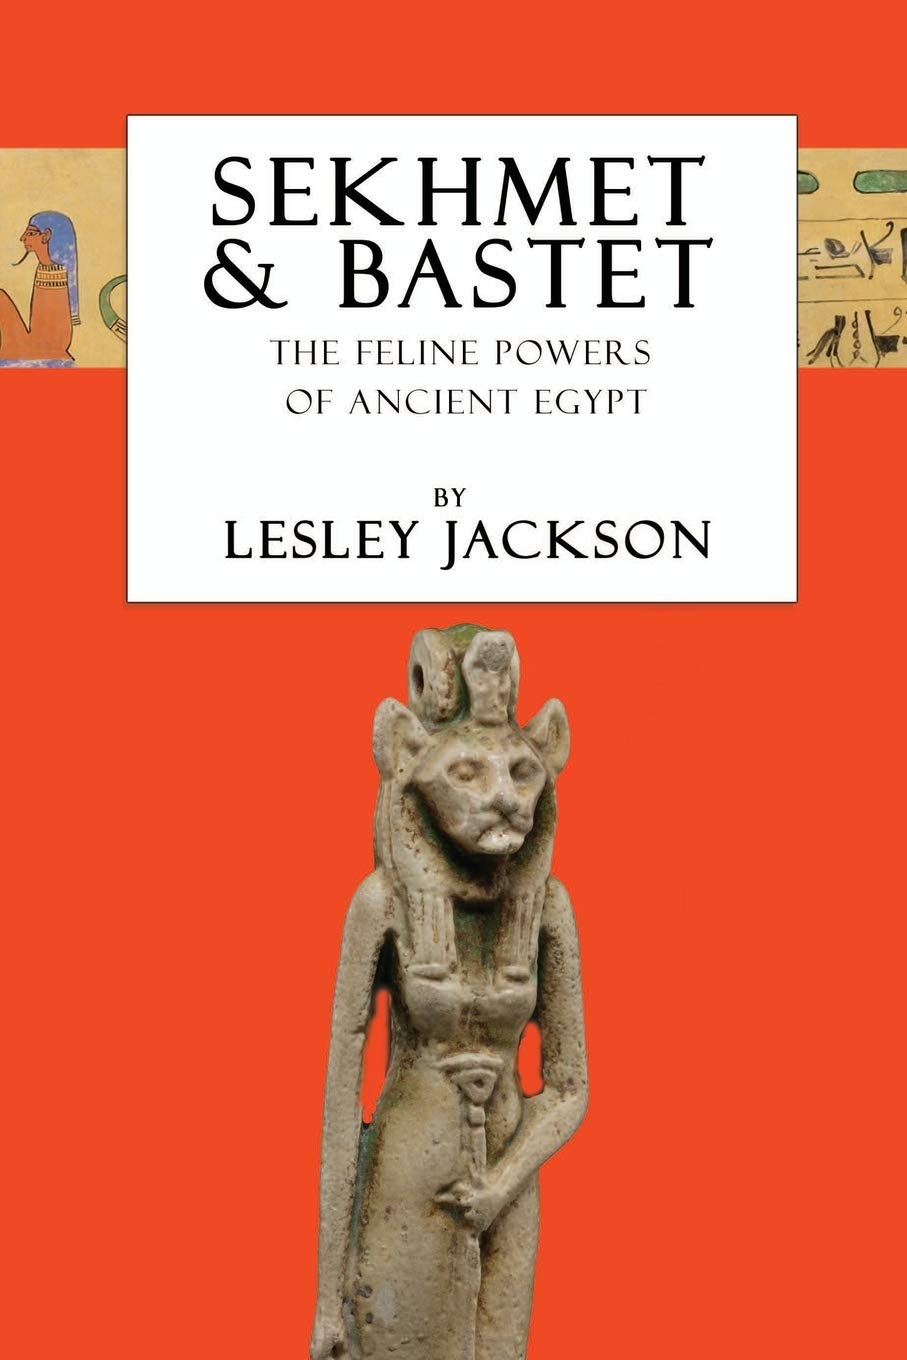 Sekhmet & Bastet: The Feline Powers of Egypt  by Lesley Jackson